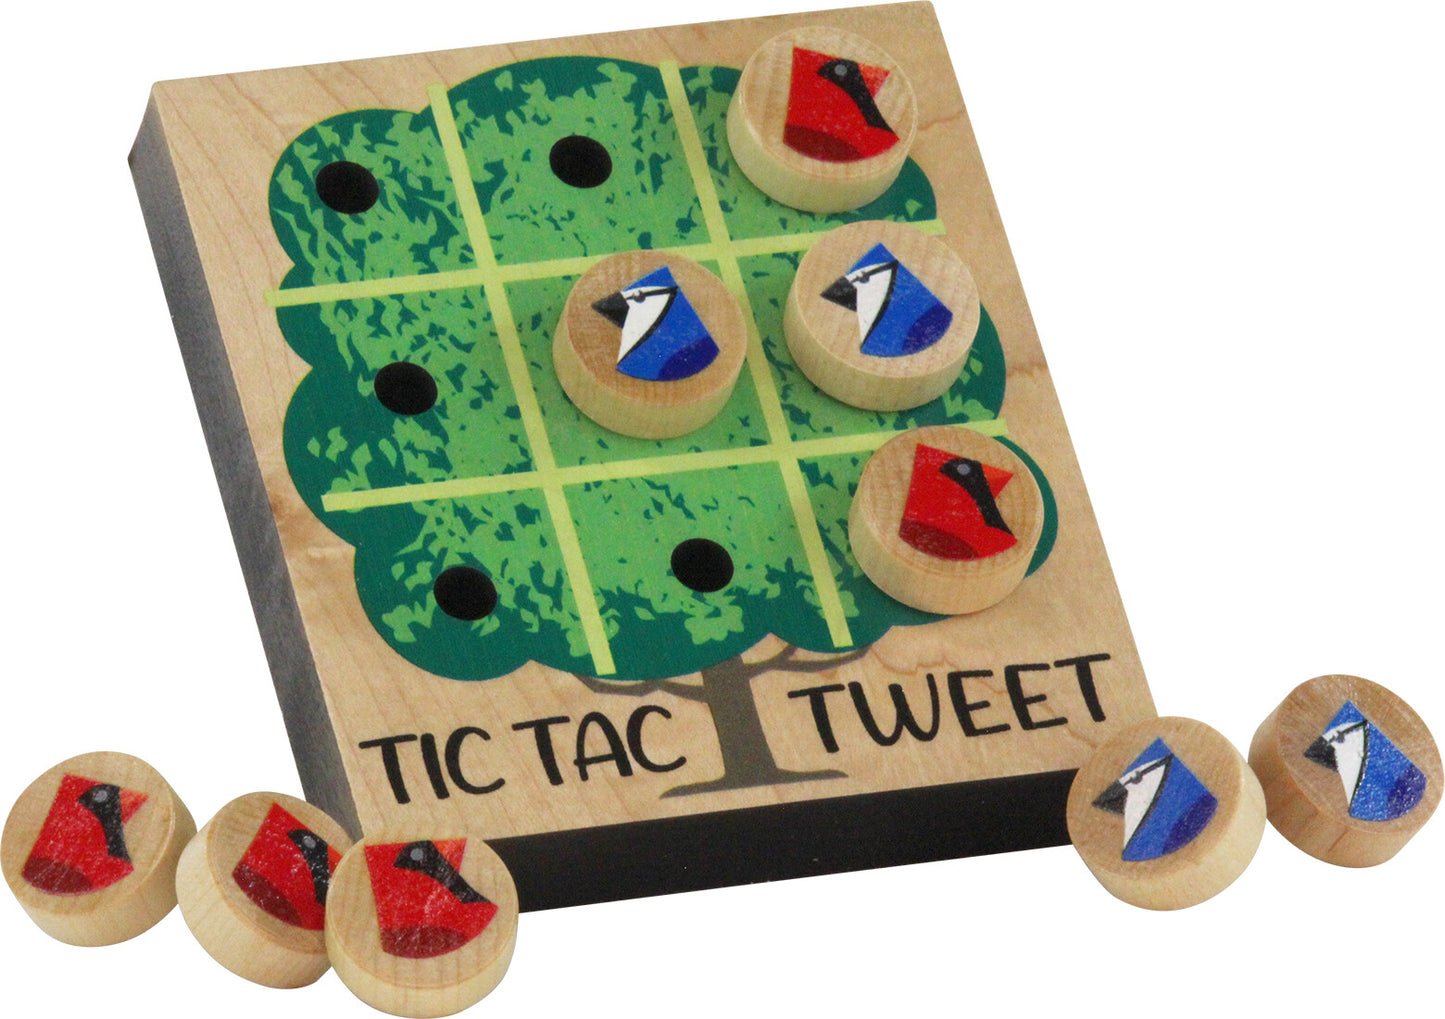 Tic-Tac-Tweet - Wooden Game